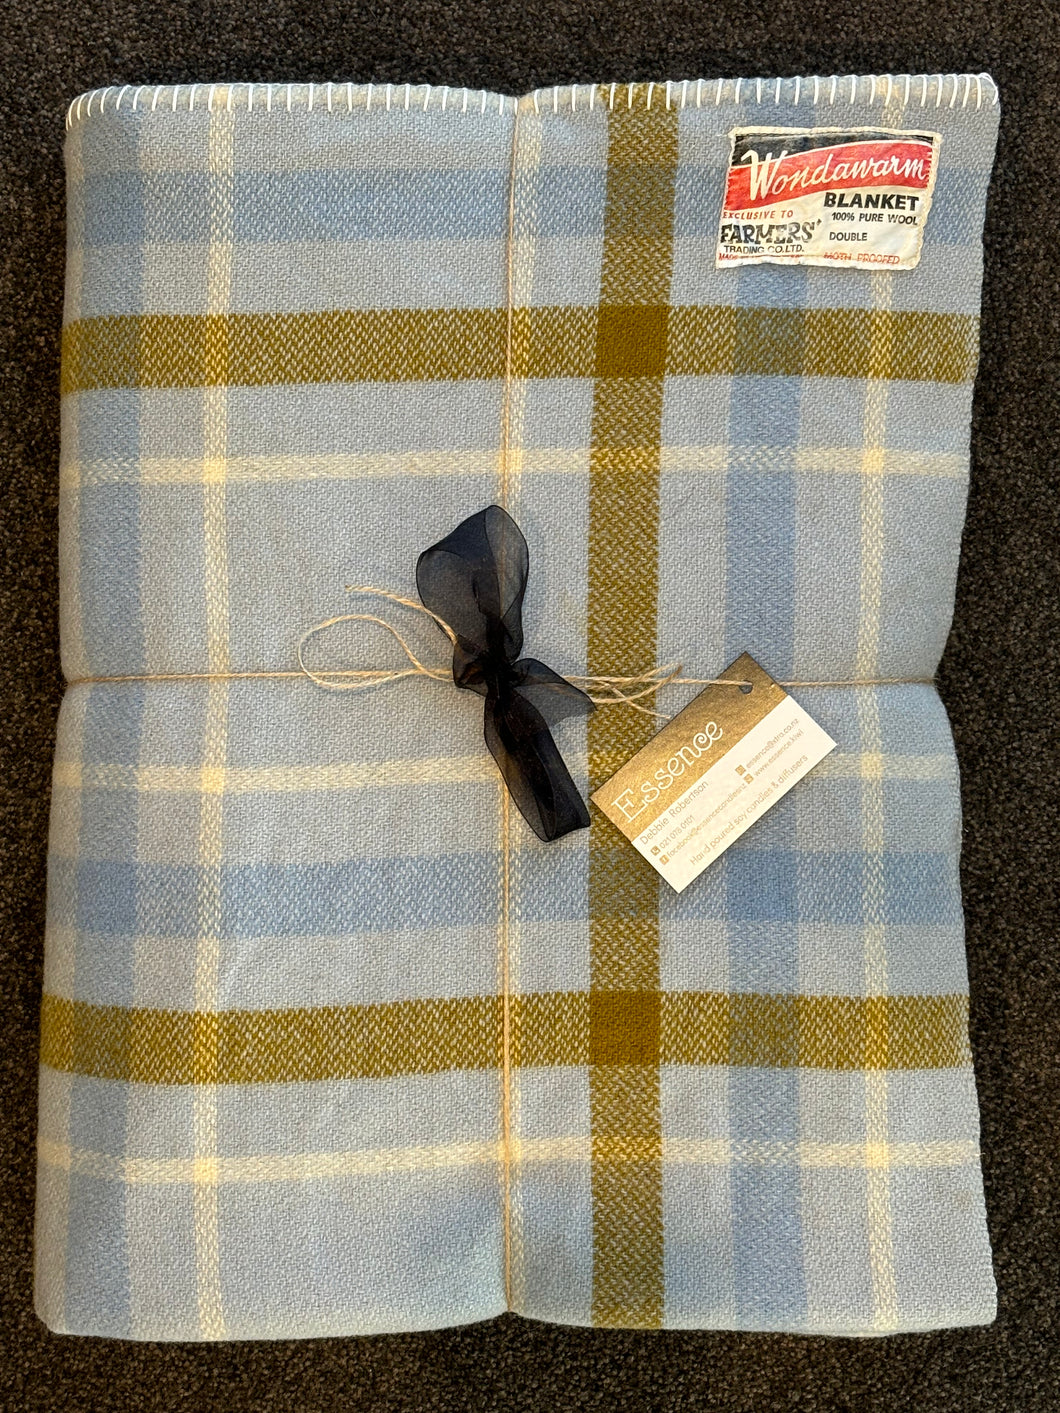 Wondawarm 100% Pure NZ Wool DOUBLE Blanket